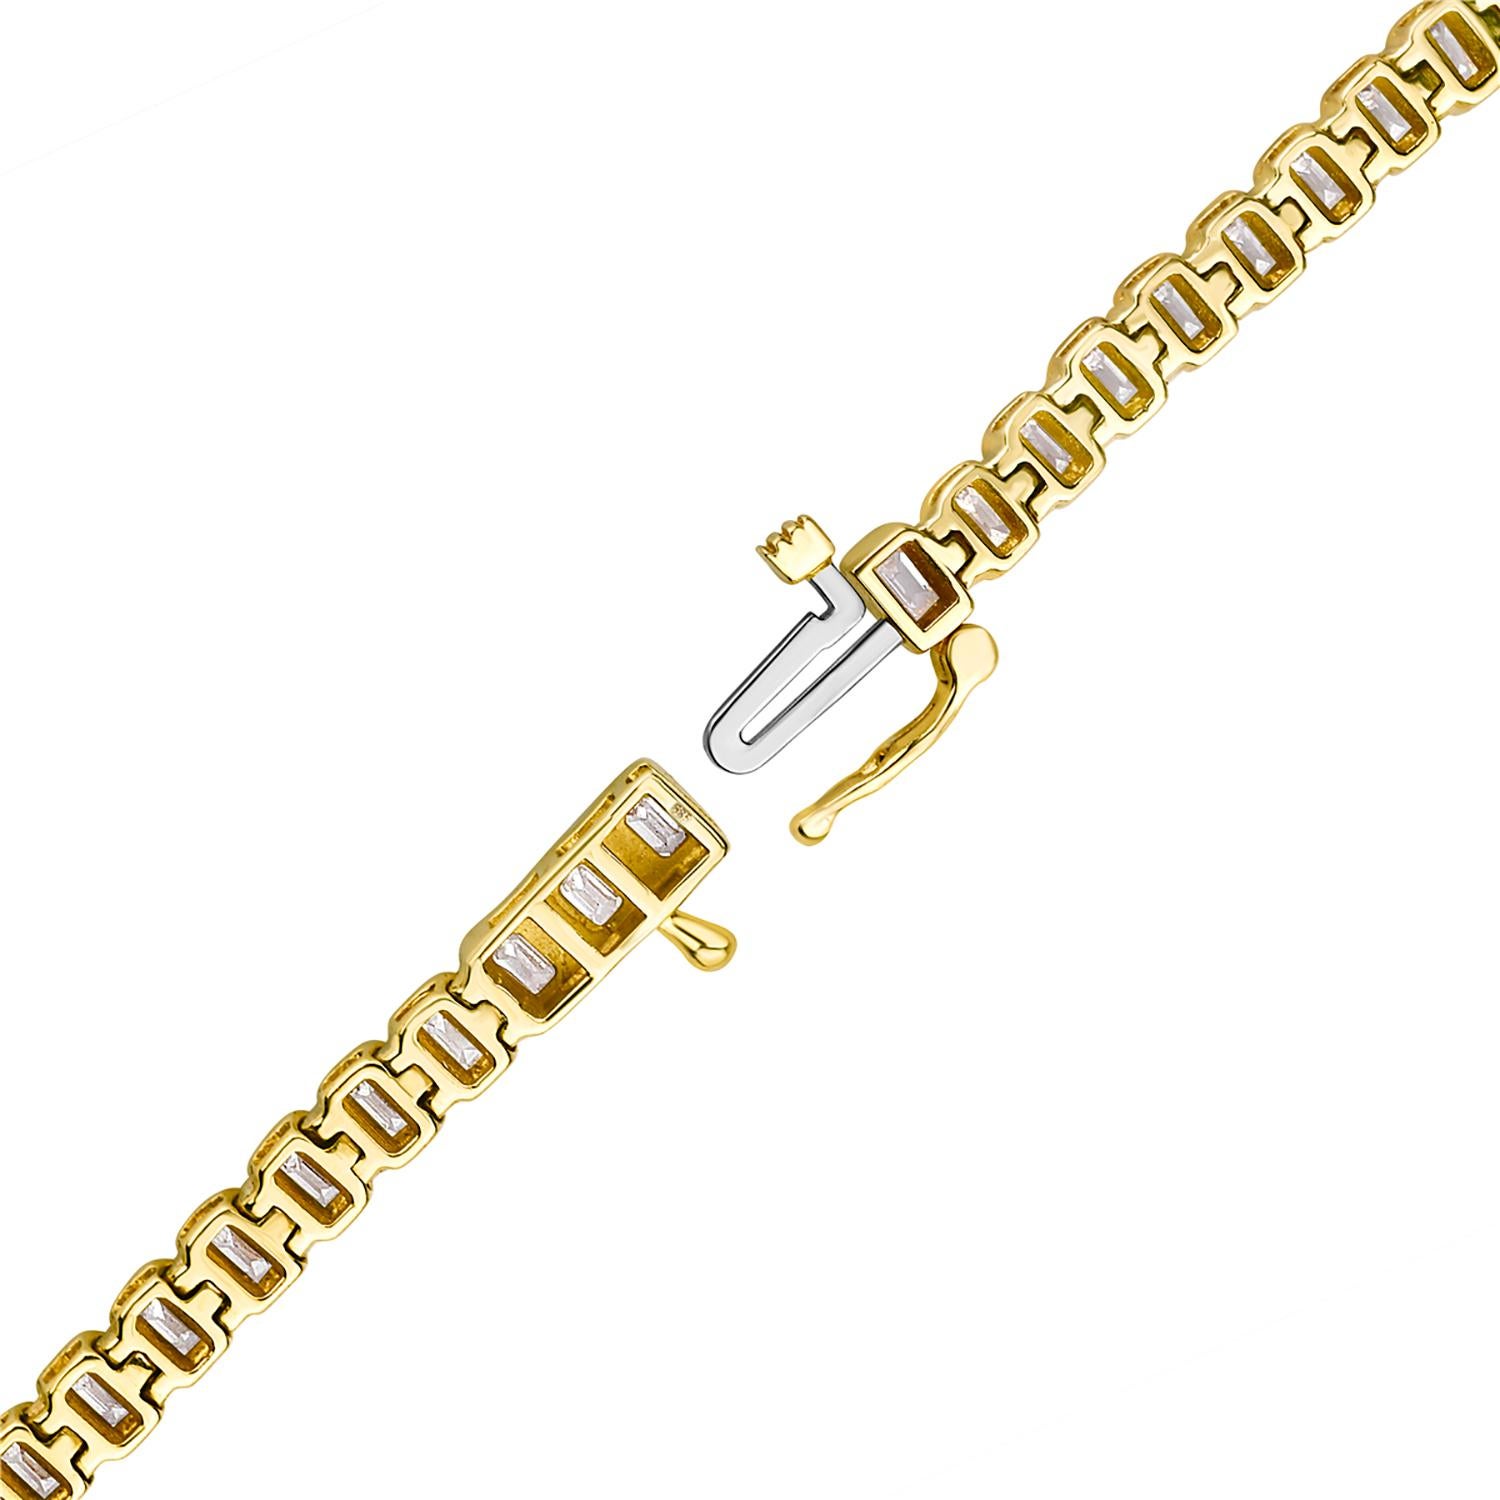 Mixed Cut Octogen Shaped Diamonds Tennis Bracelet Made in 14k Yellow Gold